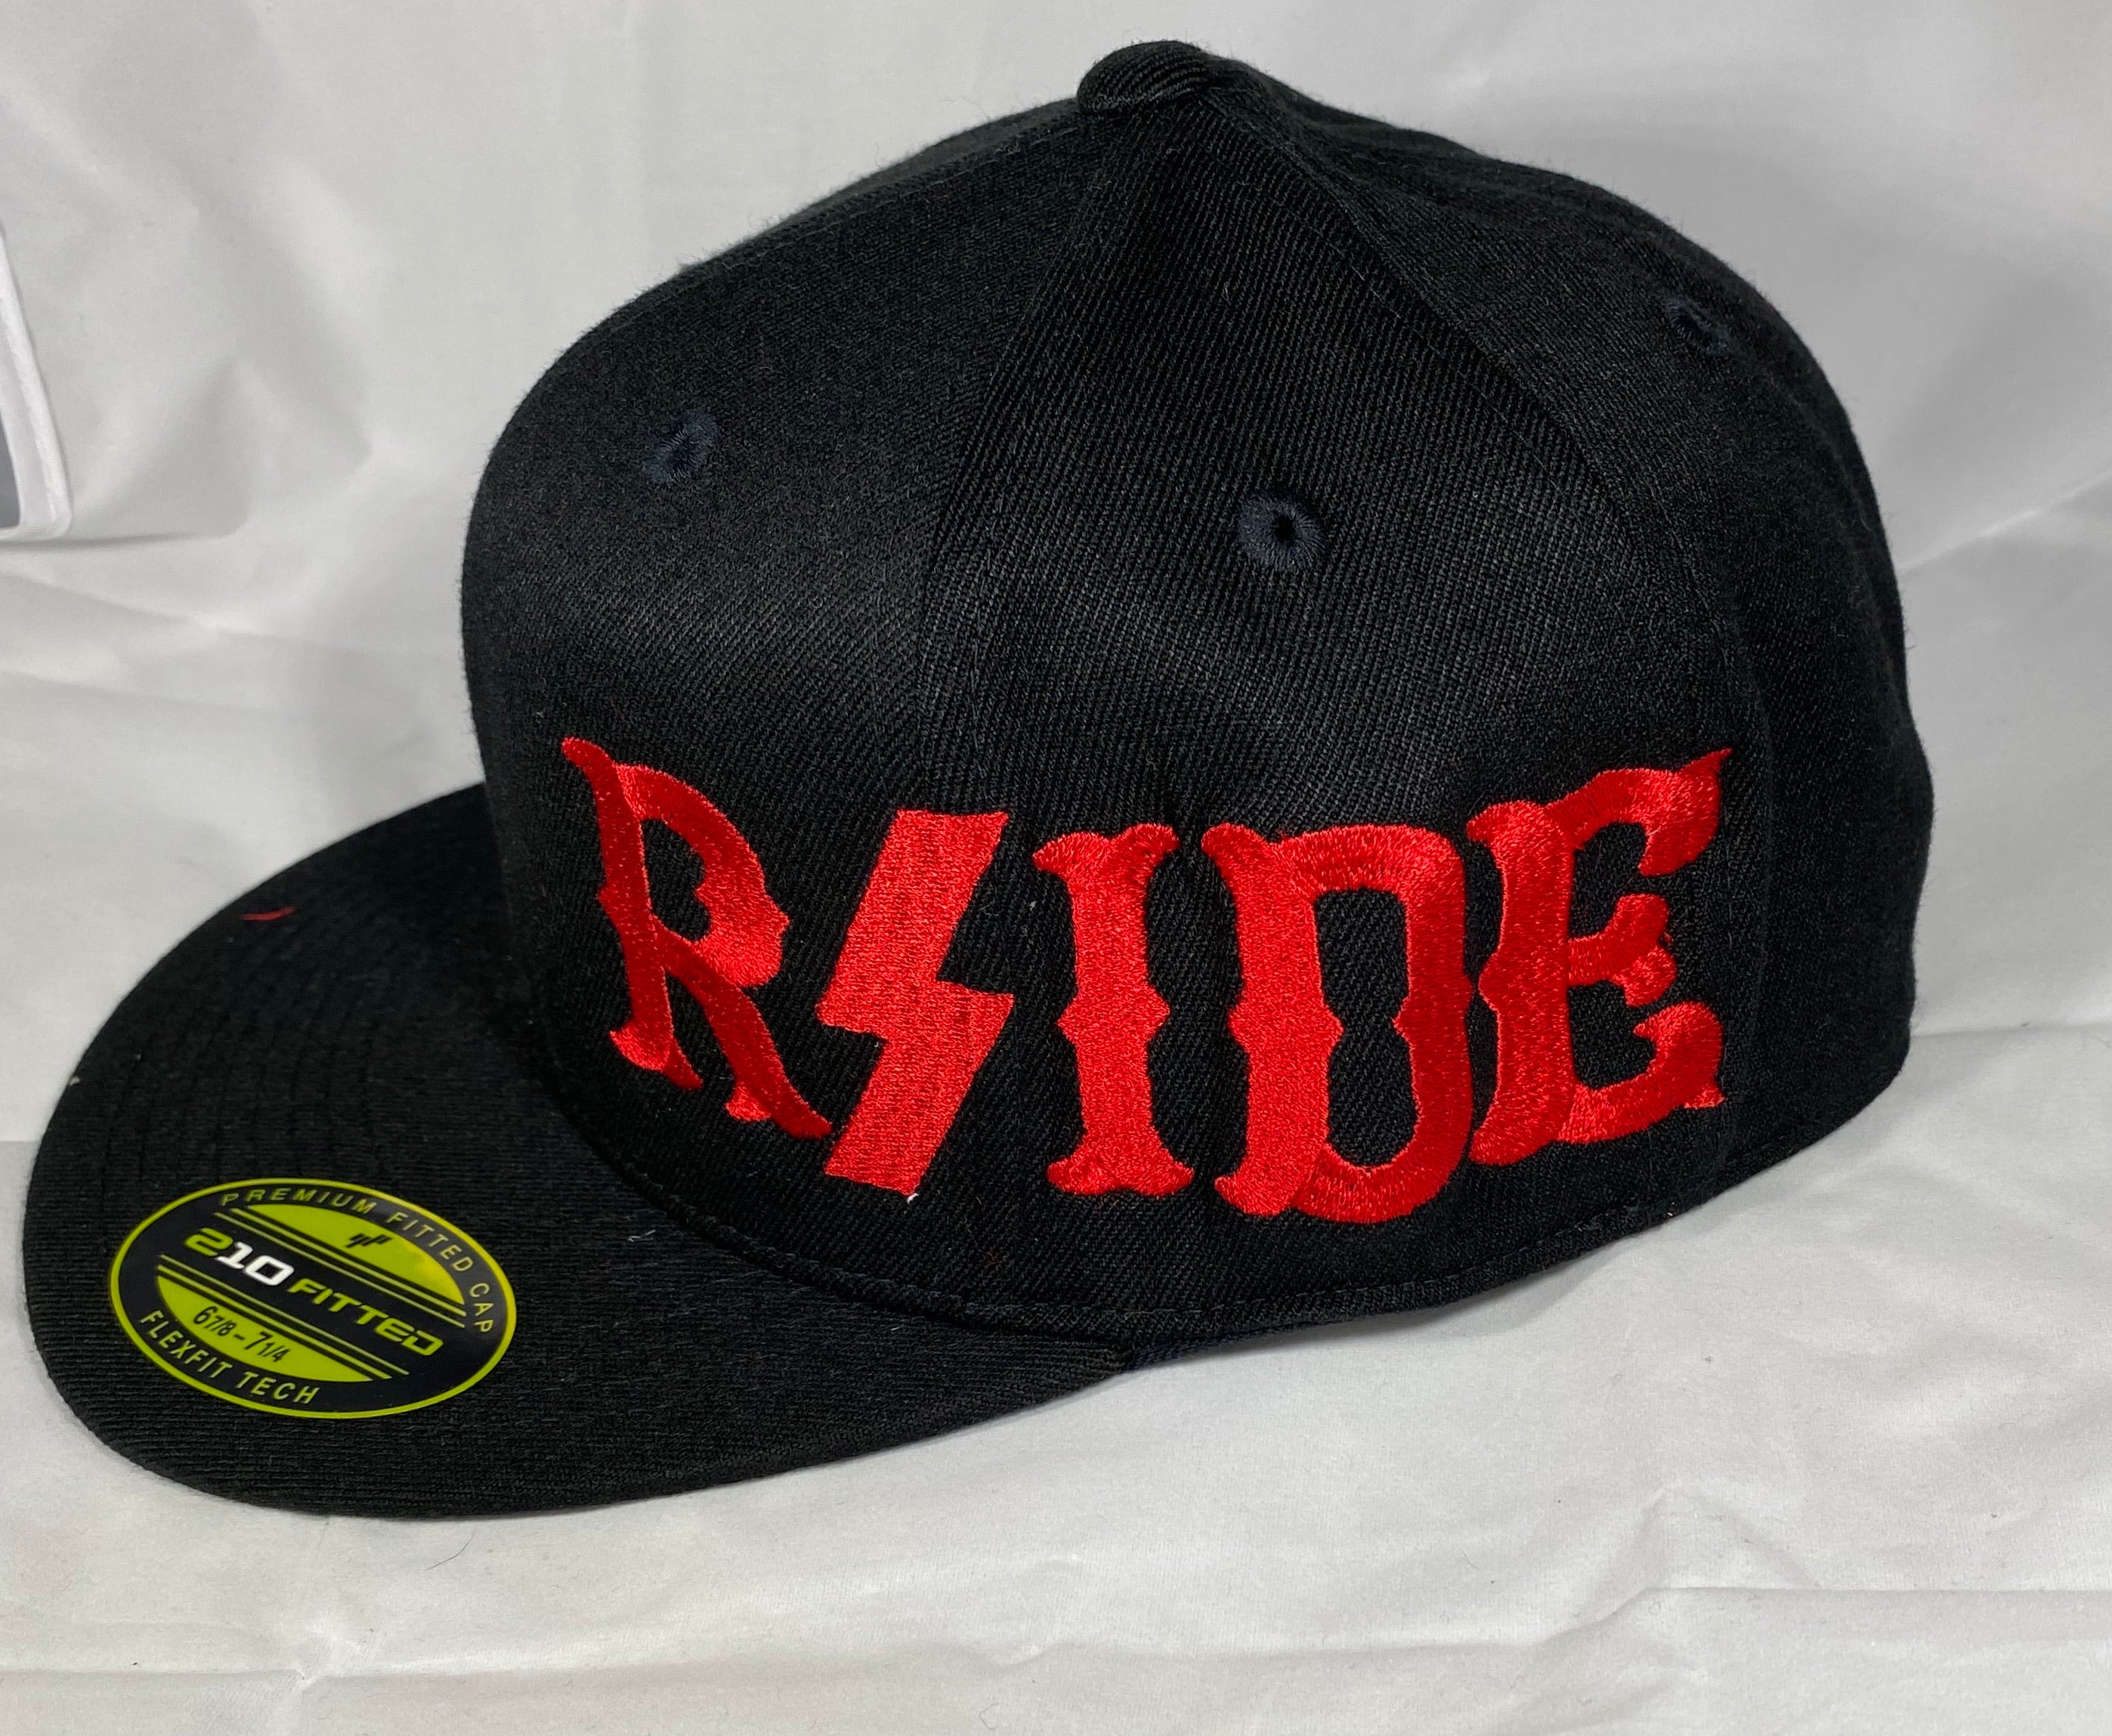 Hells Angels Flex w/Red Hat 81 Support Fit – Gear RSIDE RSIDE Black 